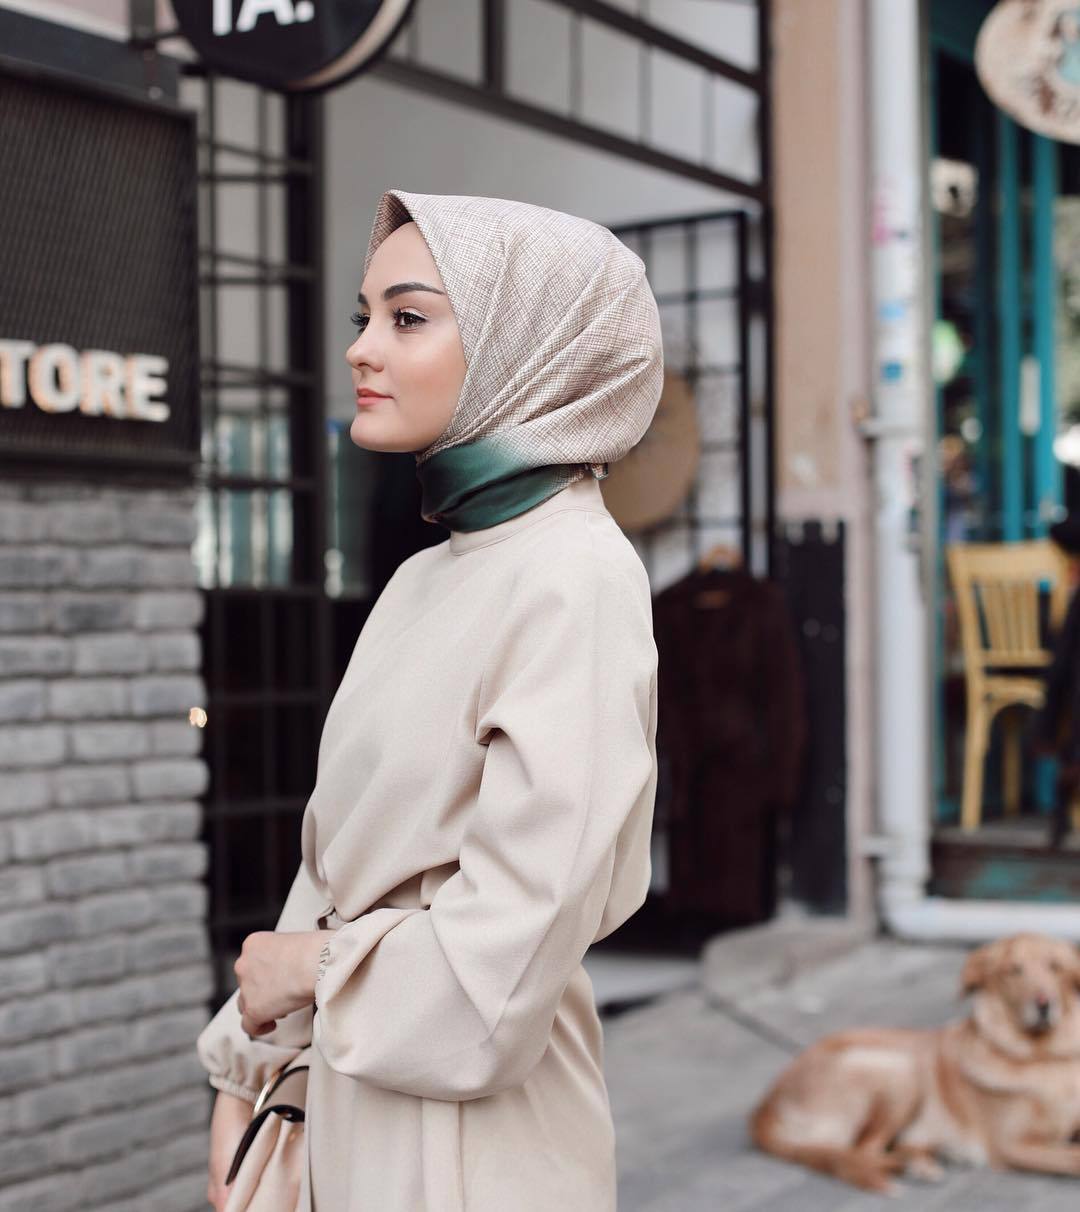 Muslim Arab girl Muslim plus size two-piece suit